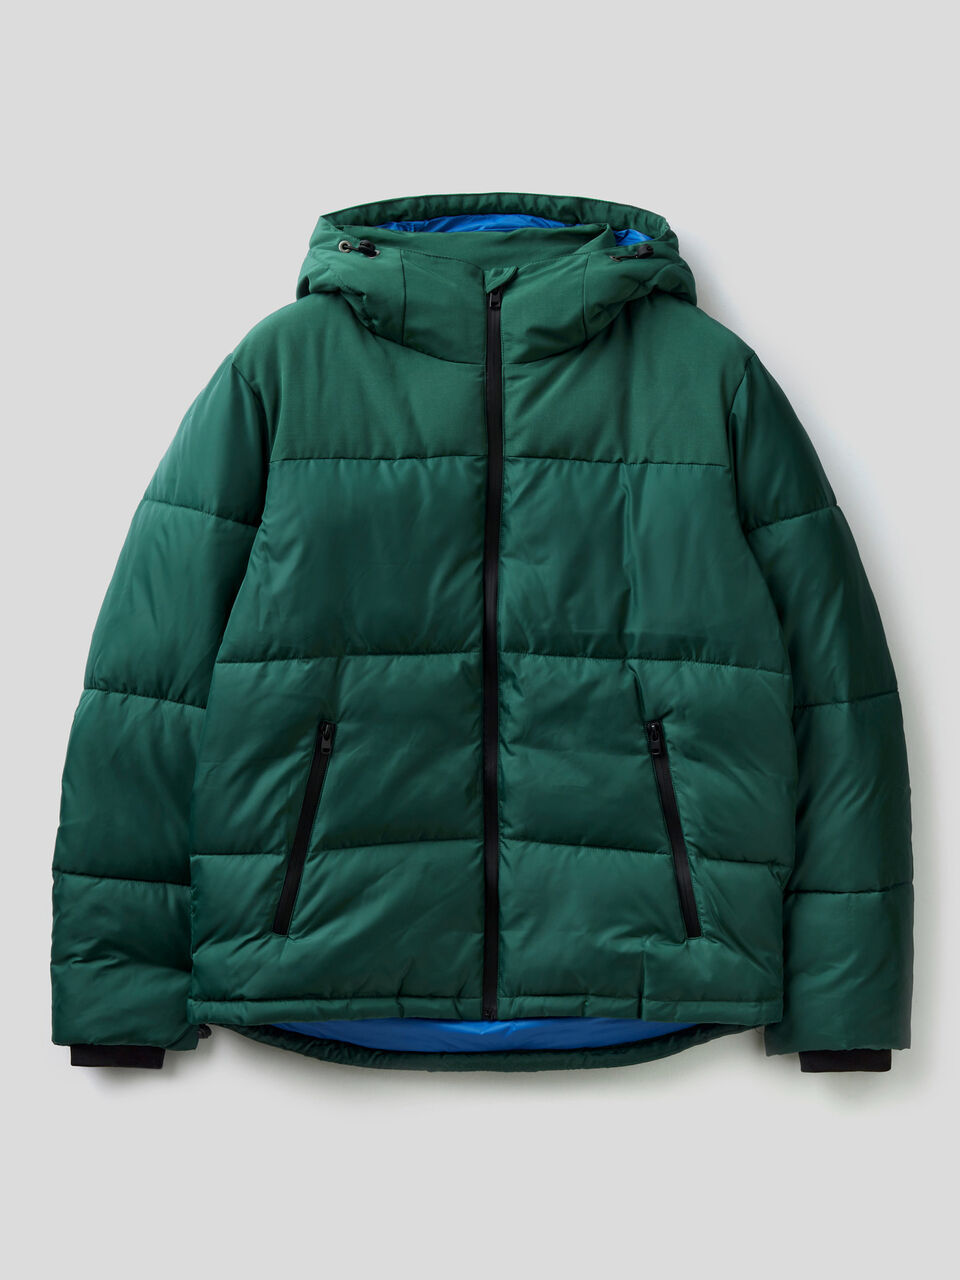 rijk snijder De schuld geven Puffer jacket with hood - Dark Green | Benetton